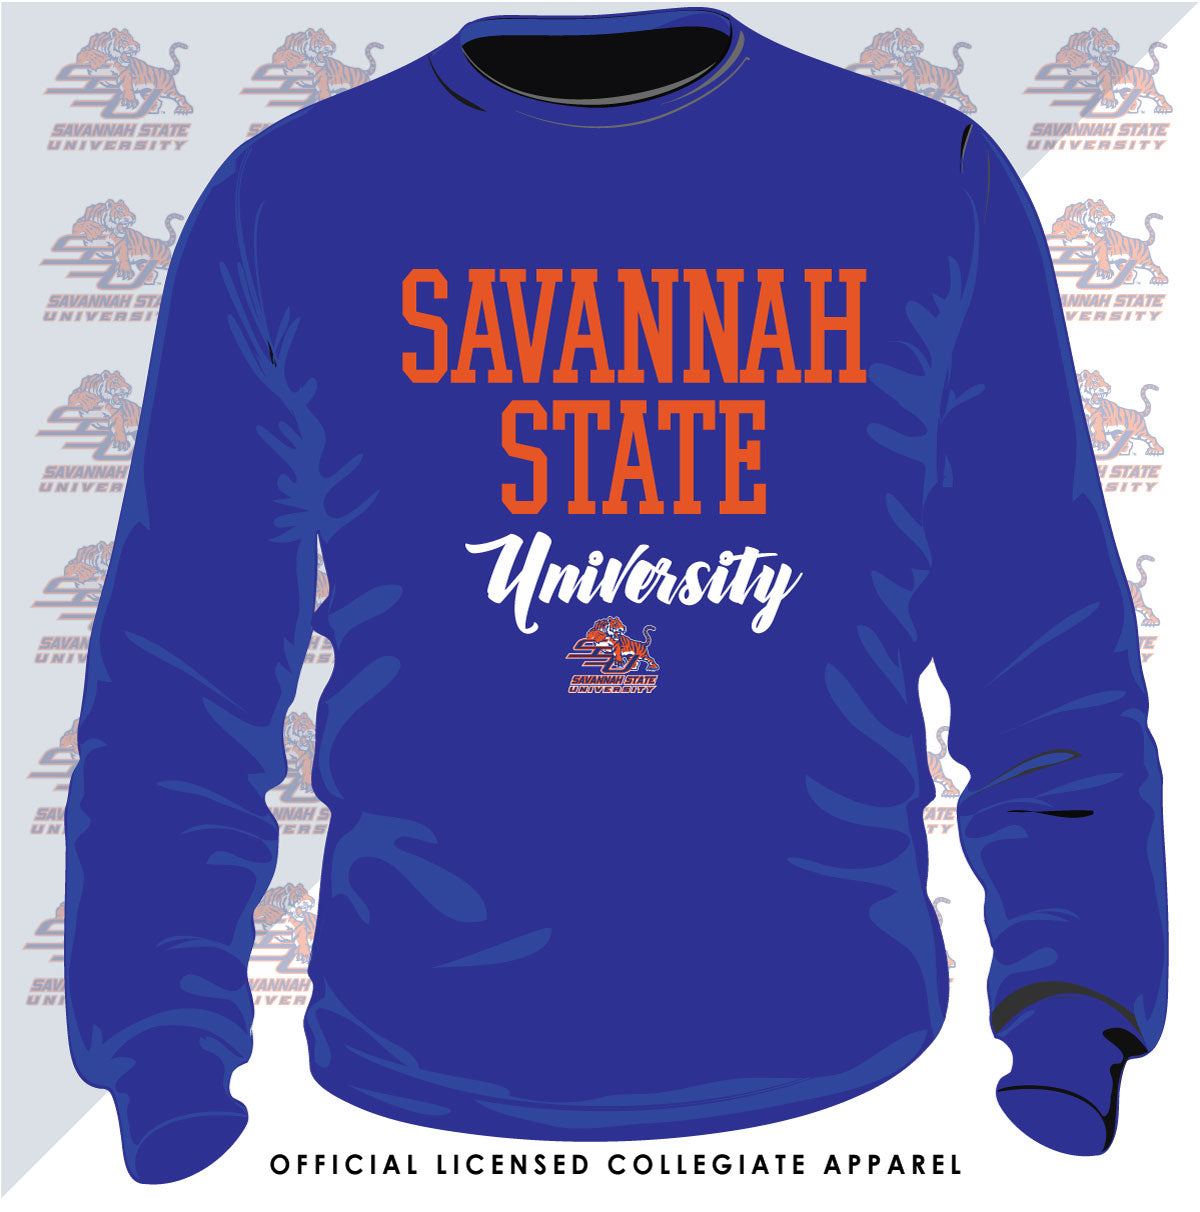 Savannah State | 2022 University Royal Blue Unisex Sweatshirt  -Z-